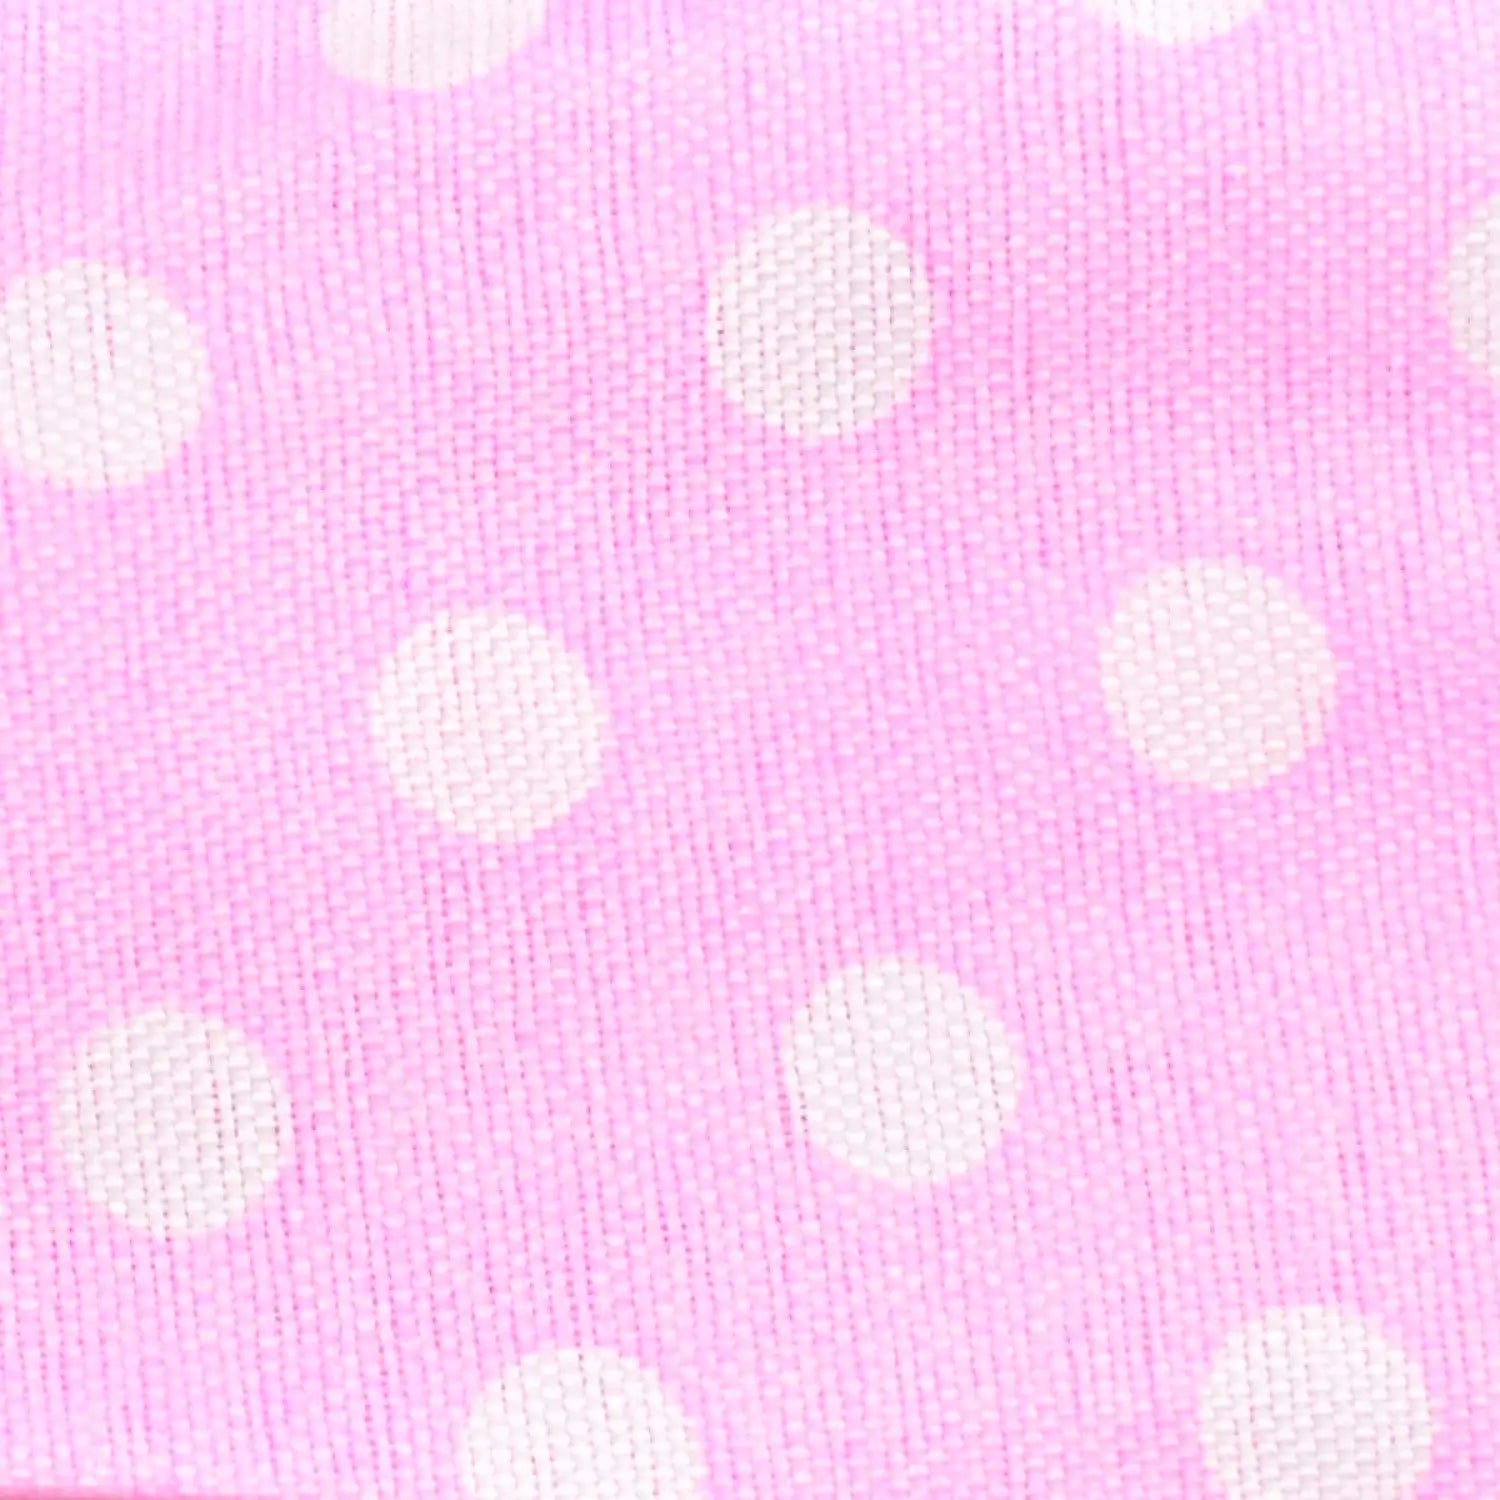 a pink polka dot fabric